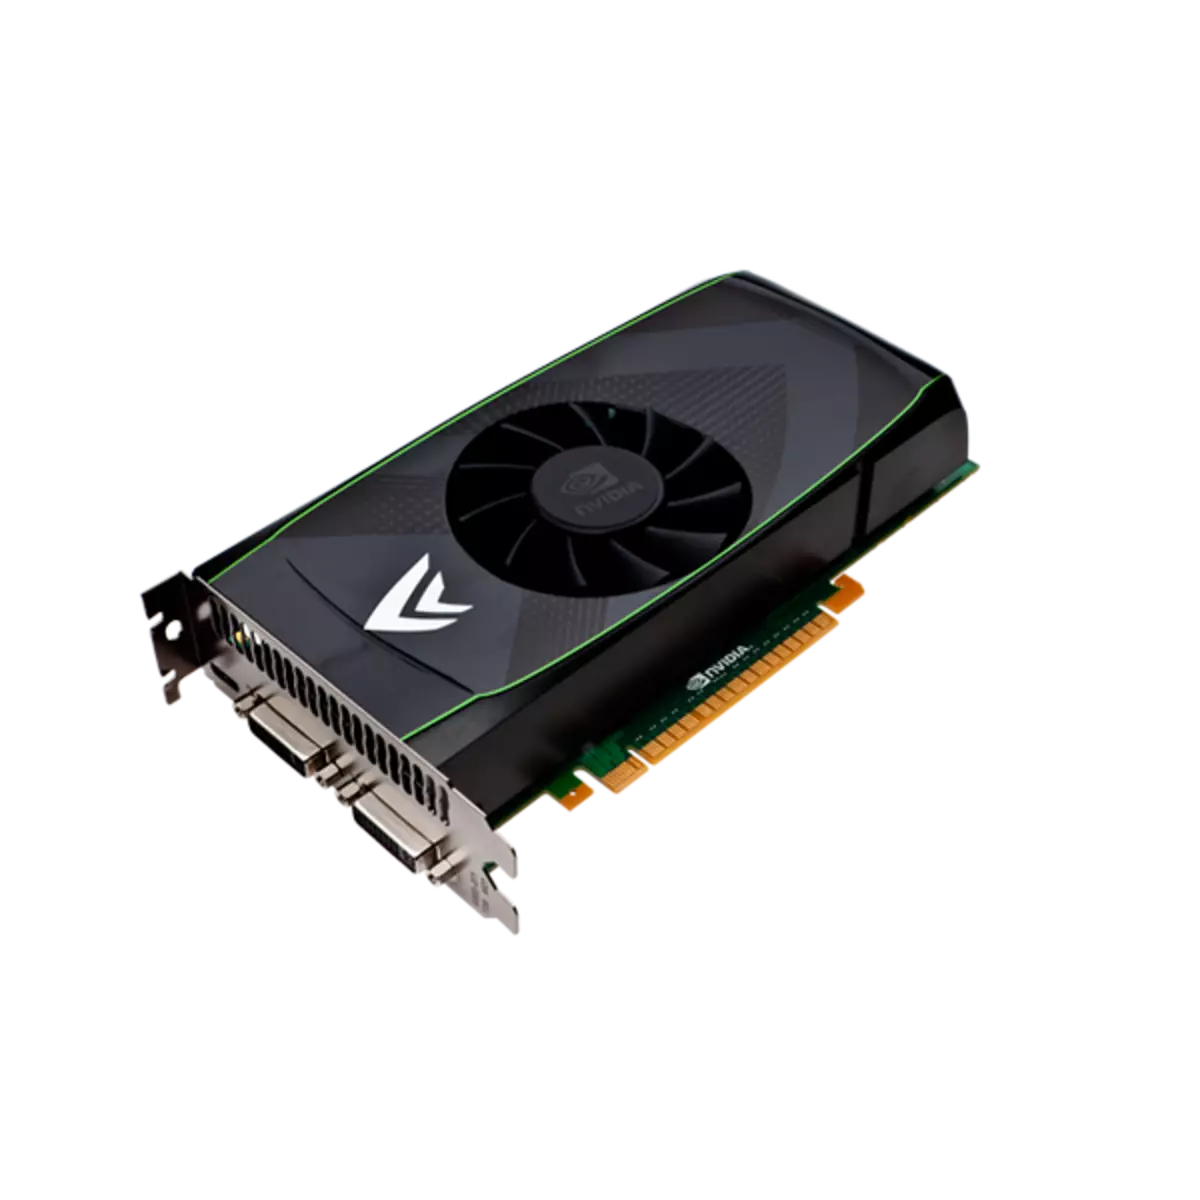 Nvidia Geforce GTS 450 සඳහා ධාවක බාගන්න